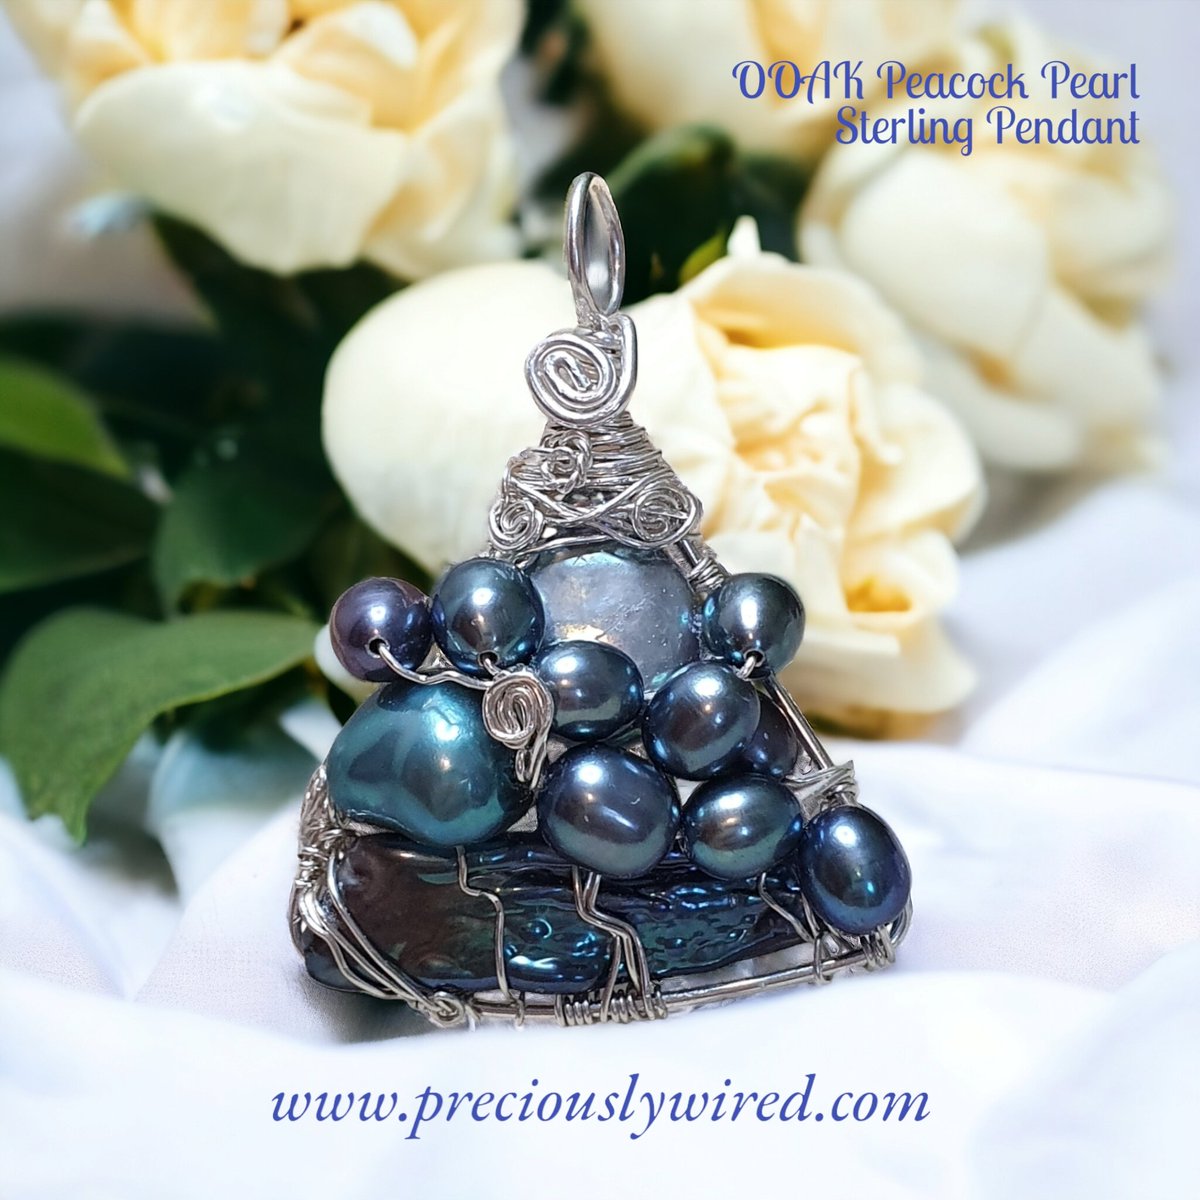 Stunningly OOAK Peacock Pearl Sterling pendant. preciouslywired.com #handmade #handmadejewellery #ukmakers #MHHSBD #smartsocial #CraftBizParty #earlybiz #breaktimehour #ElevensesHour #BizHour #Inbizhour #WomanInBizHour #YourBizHour #ForNetworking #HandmadeHour #MakersHour